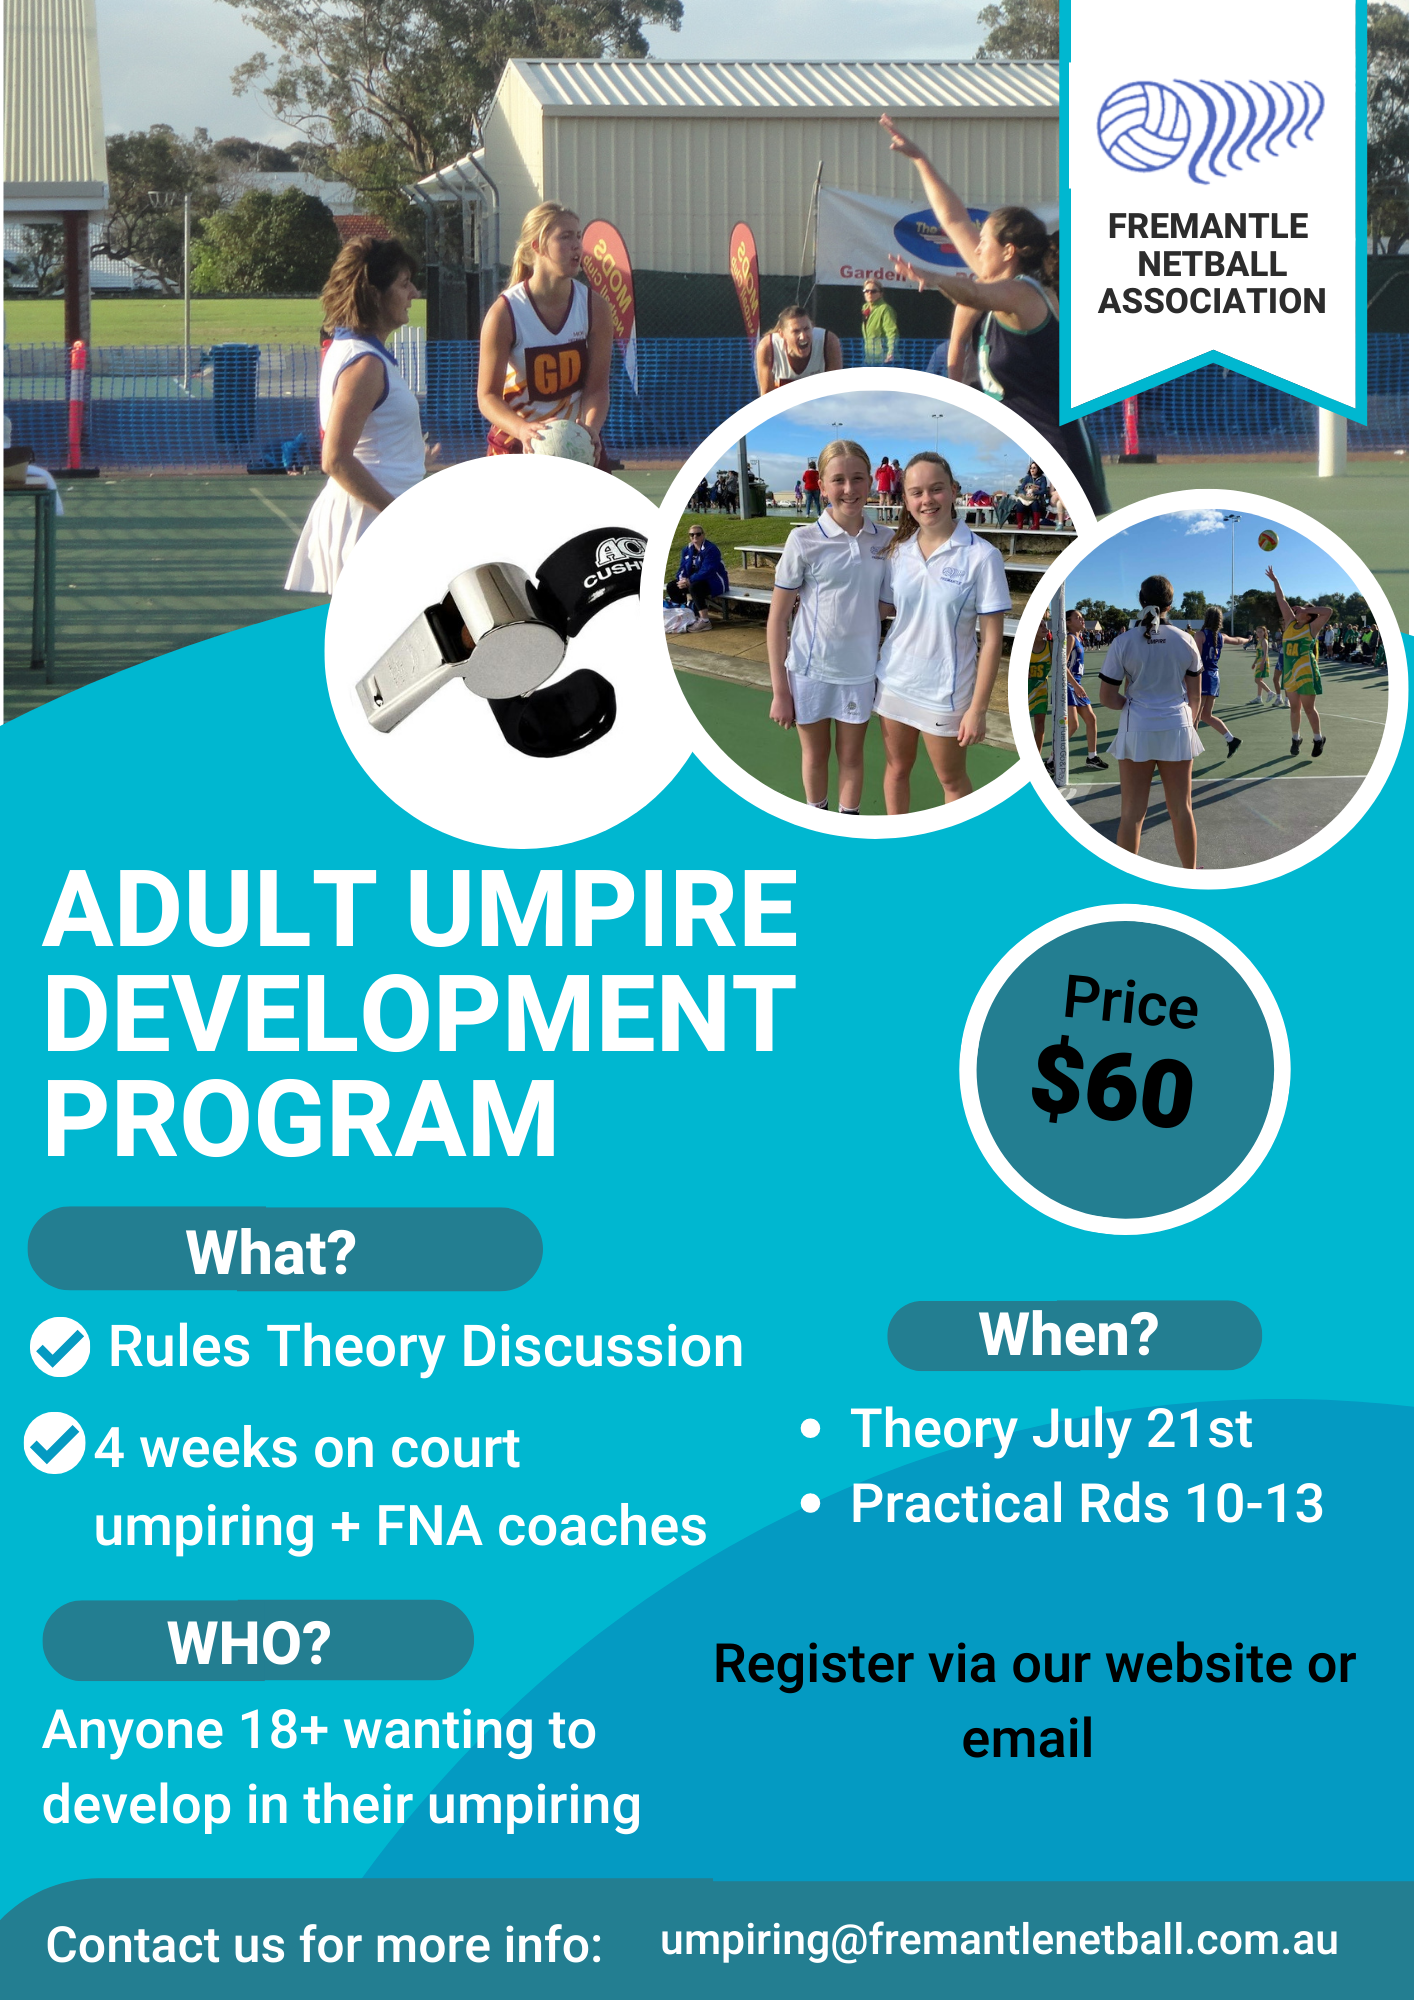 Adult umpire Development Program Flyer: Register for the program at; https://forms.gle/dLaYczLL9BdFuzvM9